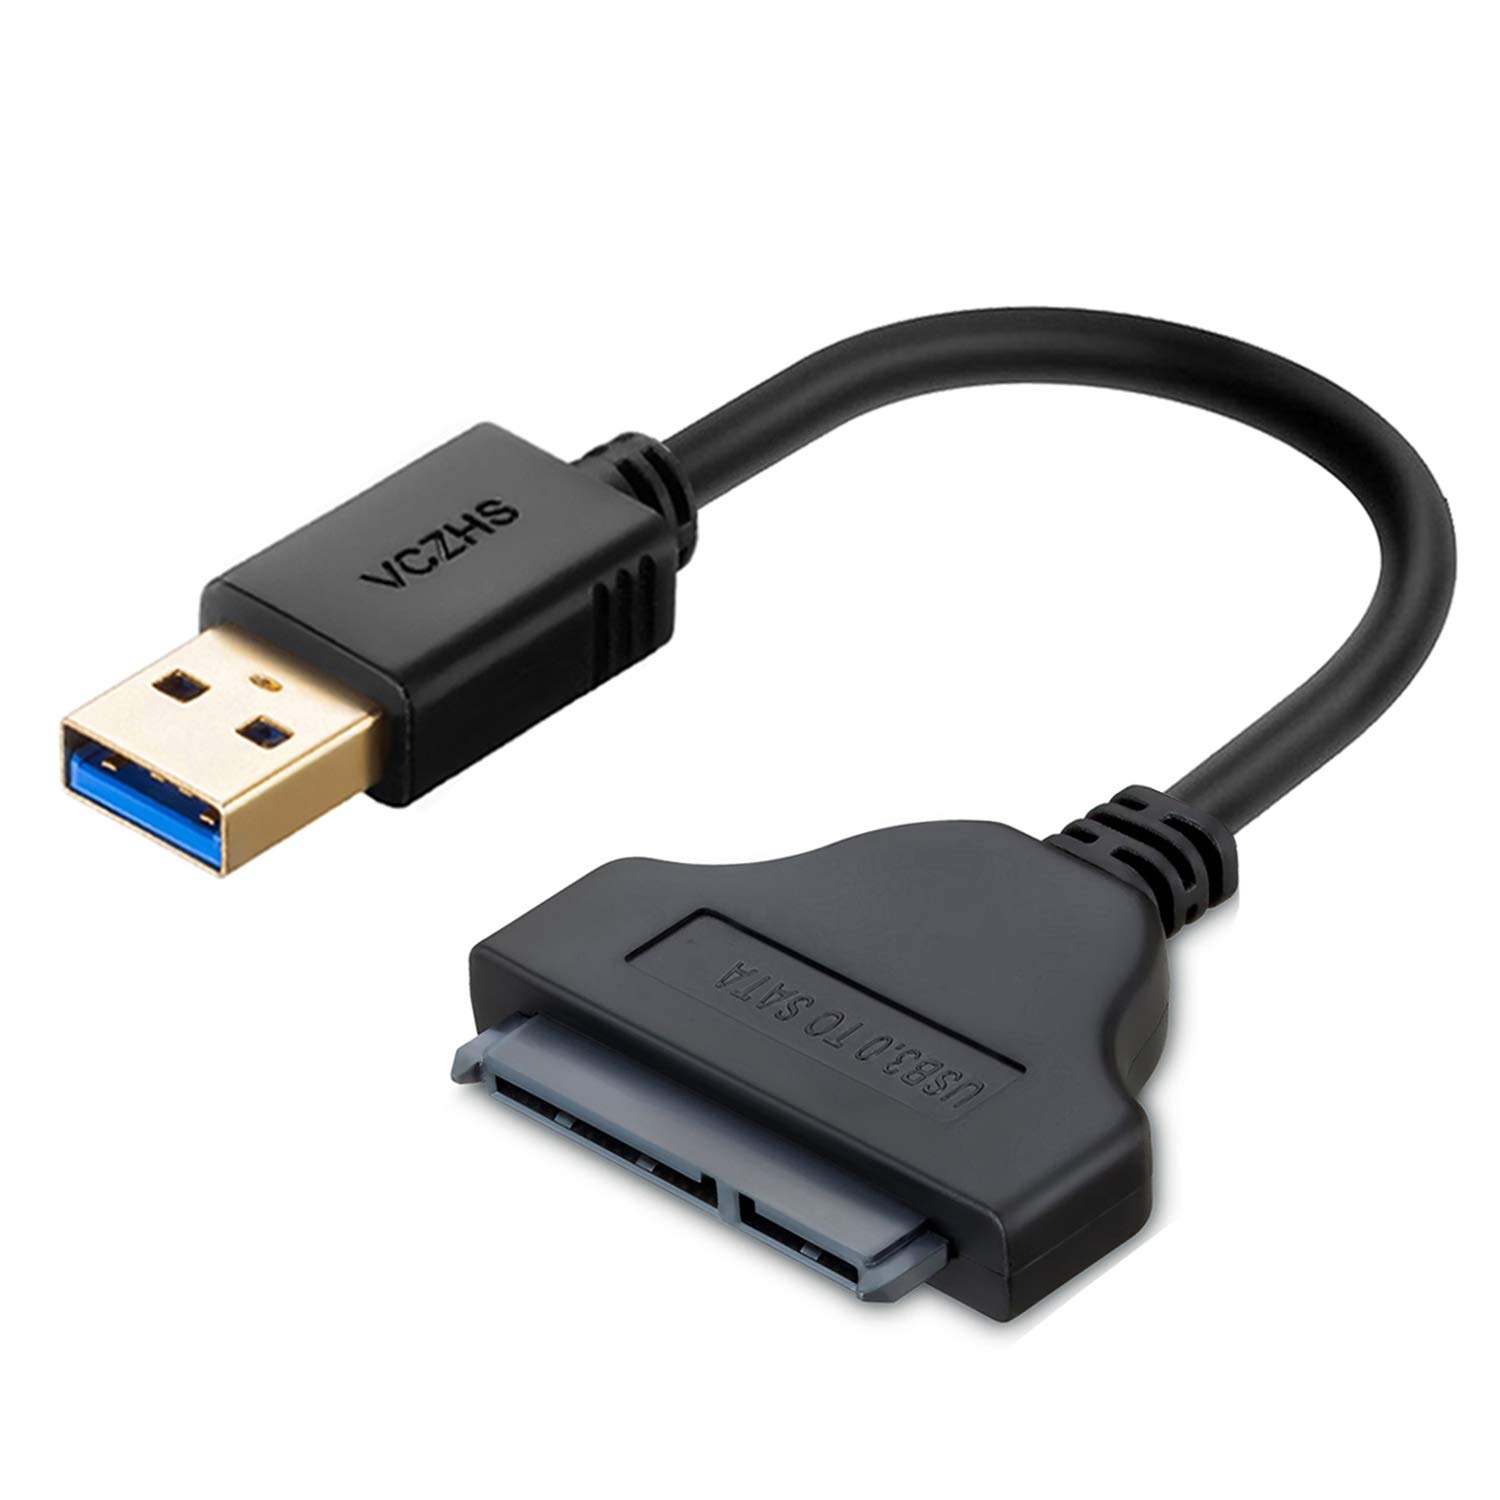 Usb c sata. Usb3 to hdd2’5 адаптер. SATA to USB 3.0. Адаптер SATA III юсб. Переходник SATA на USB 3.0.